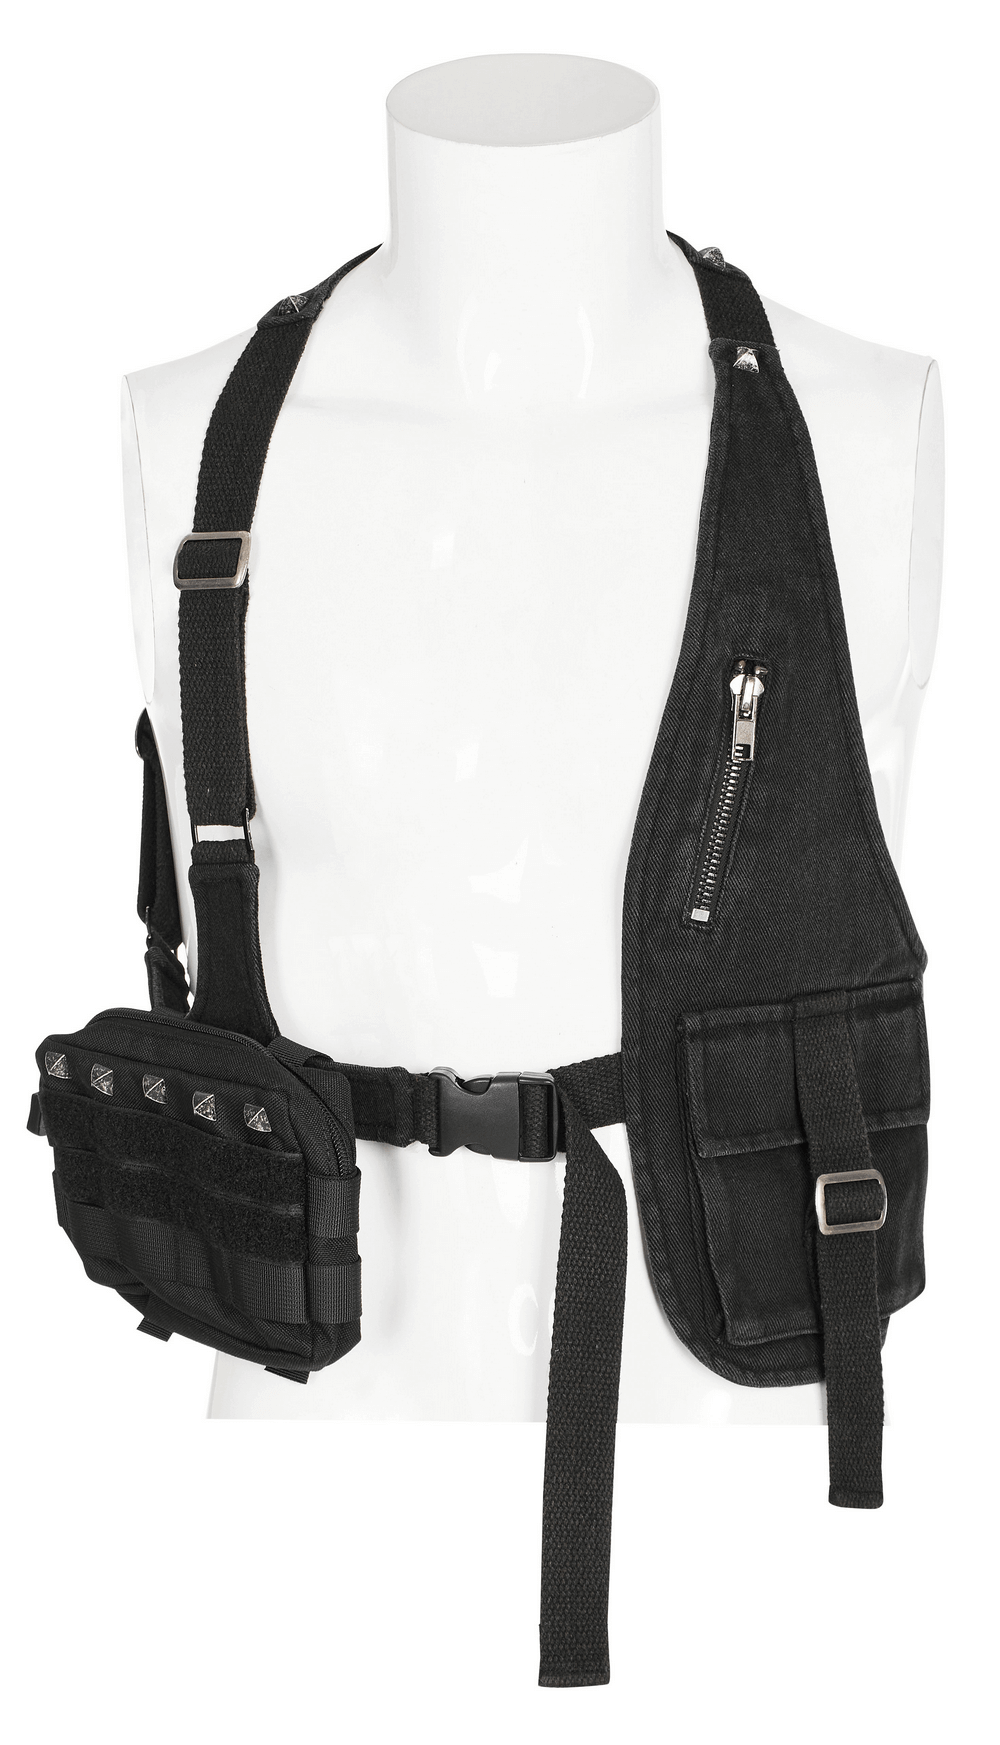 Tactical Punk Detachable Bag with Belt and Adjuster